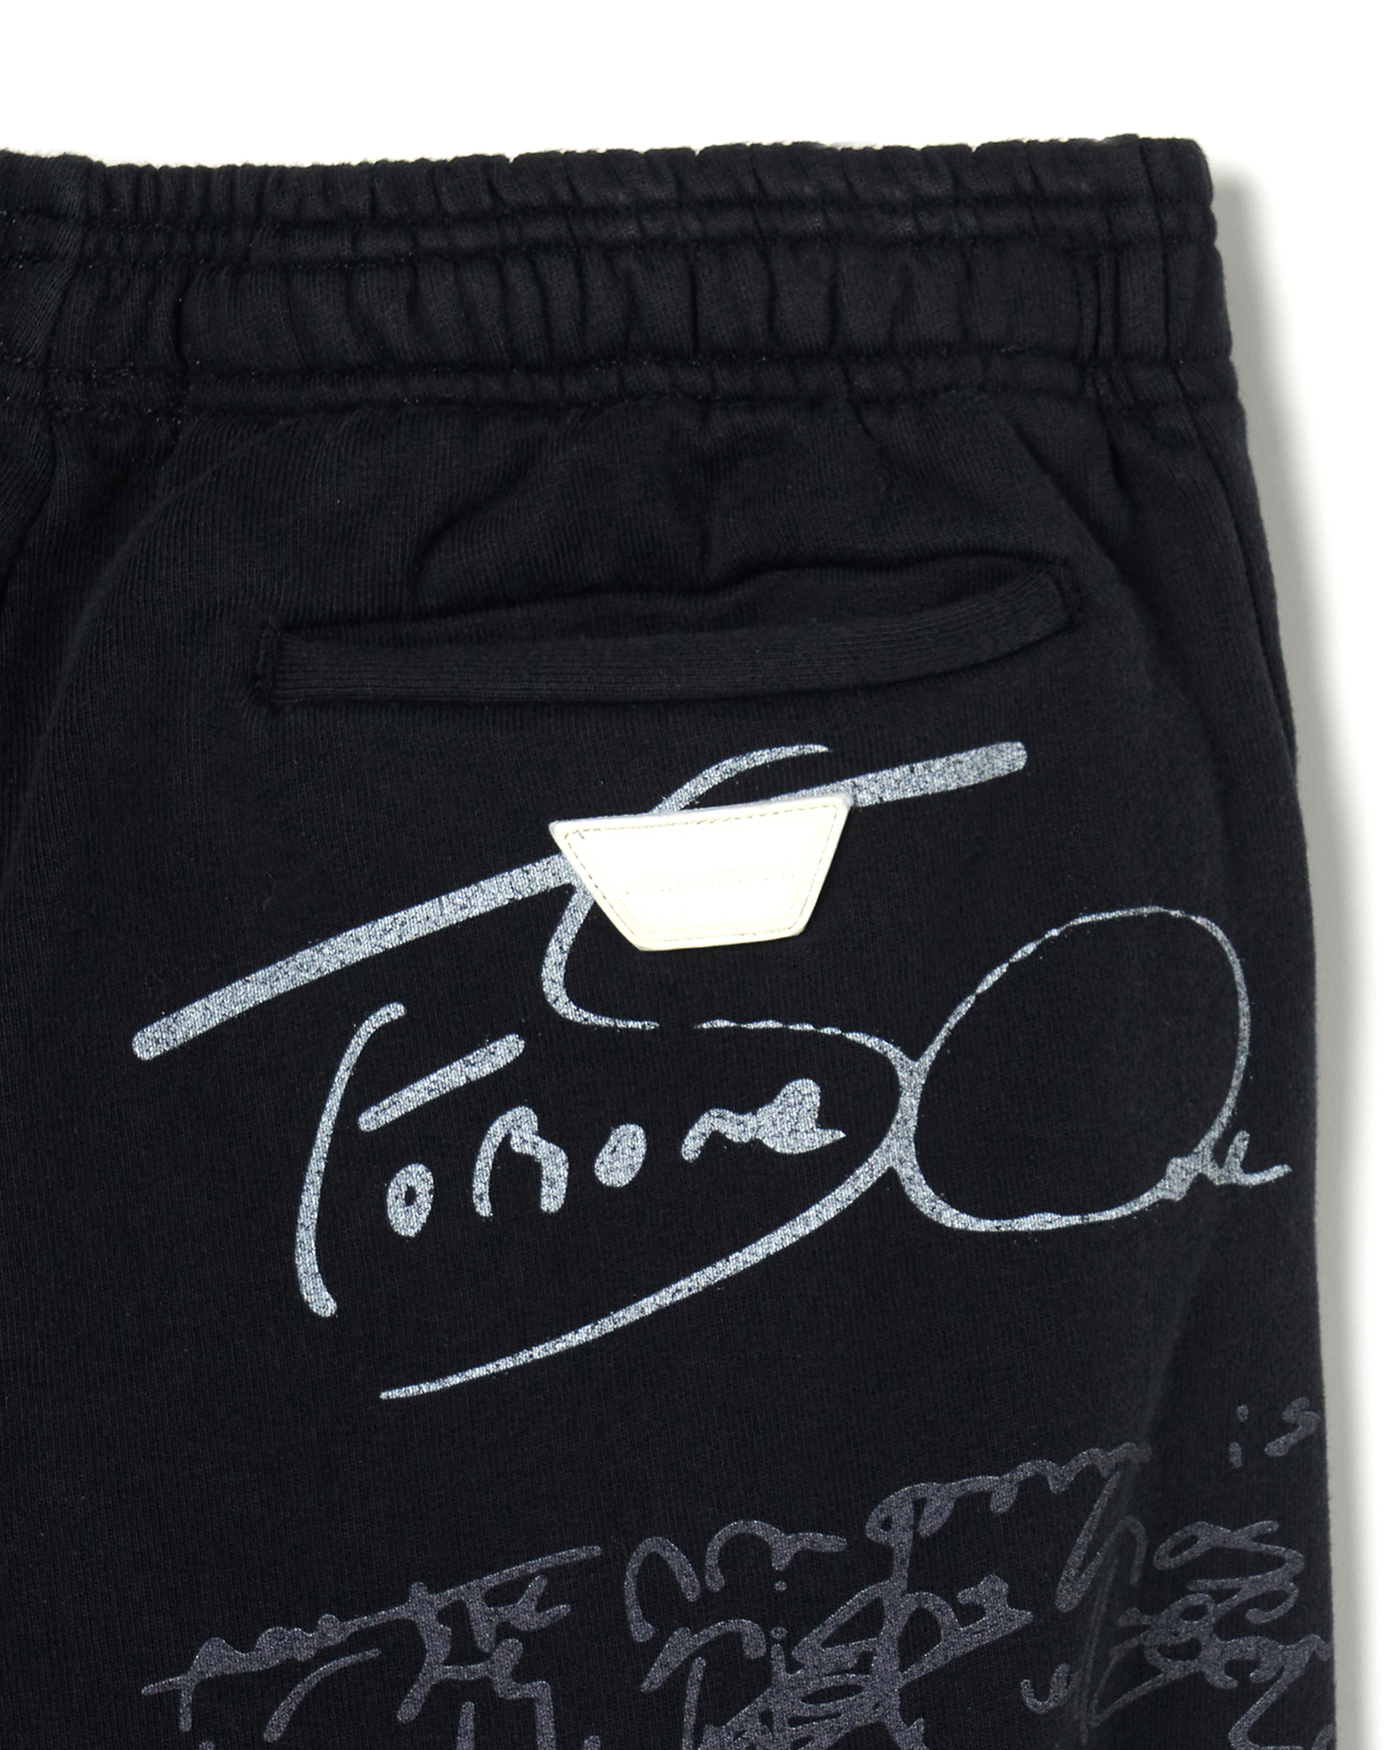 HIROKI TSUKUDA×FORSOMEONE TAGS SWEAT PANTS 詳細画像 Black 15